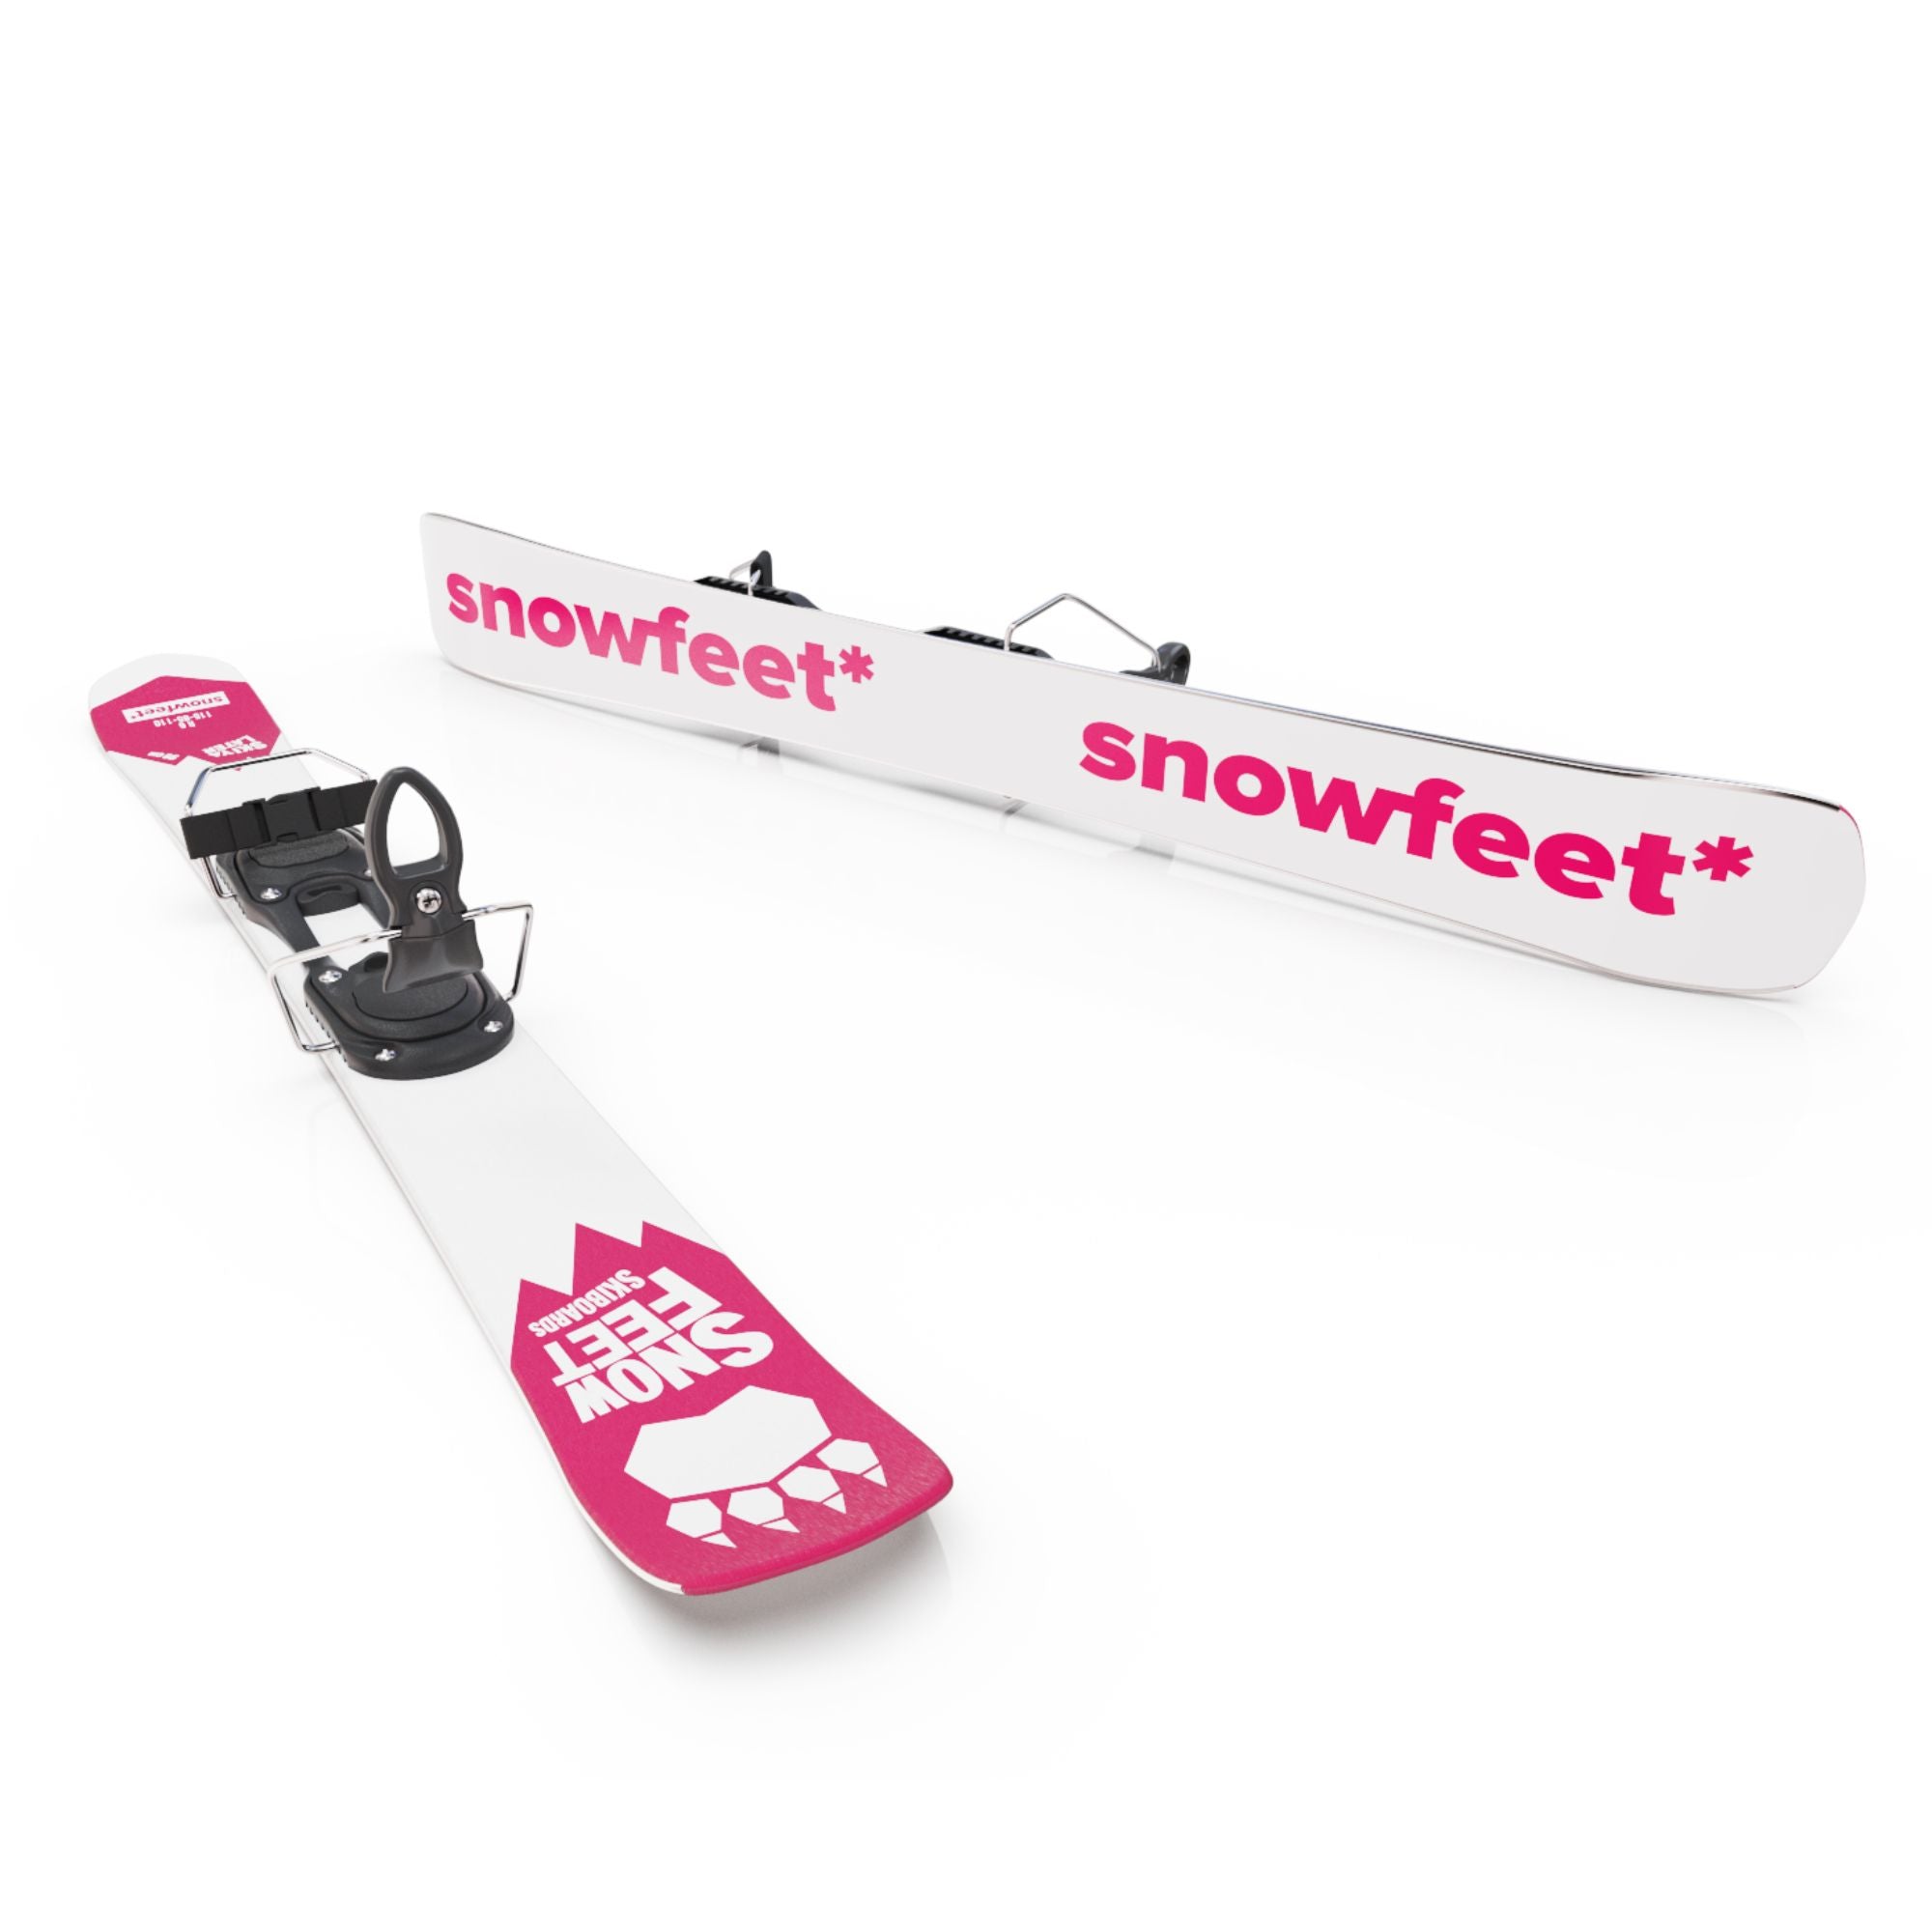 Snowfeet* POWDER Skiblades, 99 CM